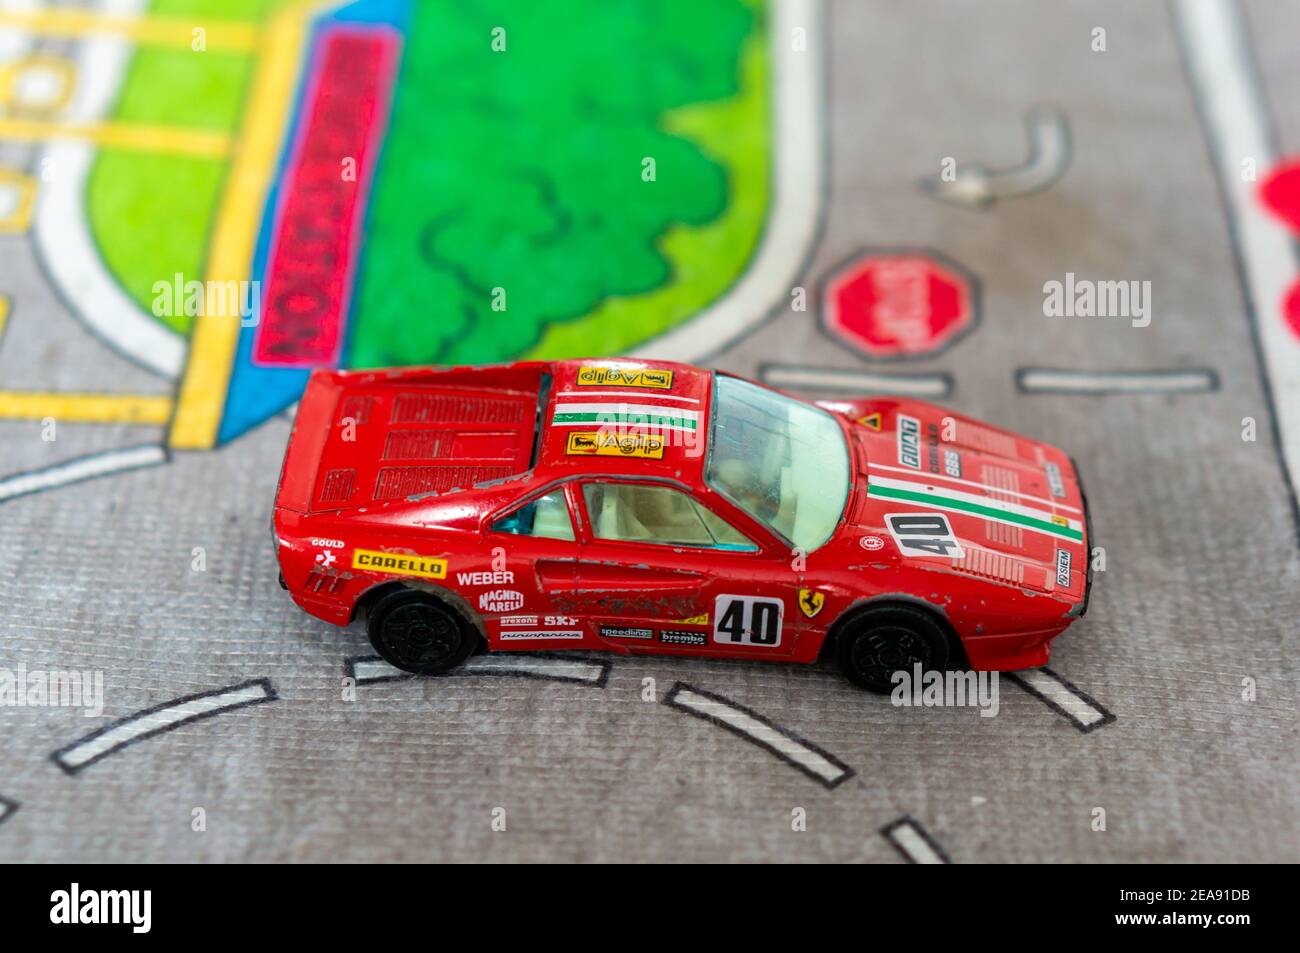 POZNAN, POLAND - Sep 10, 2018: Red toy model Ferrari sport car on a road mat Stock Photo